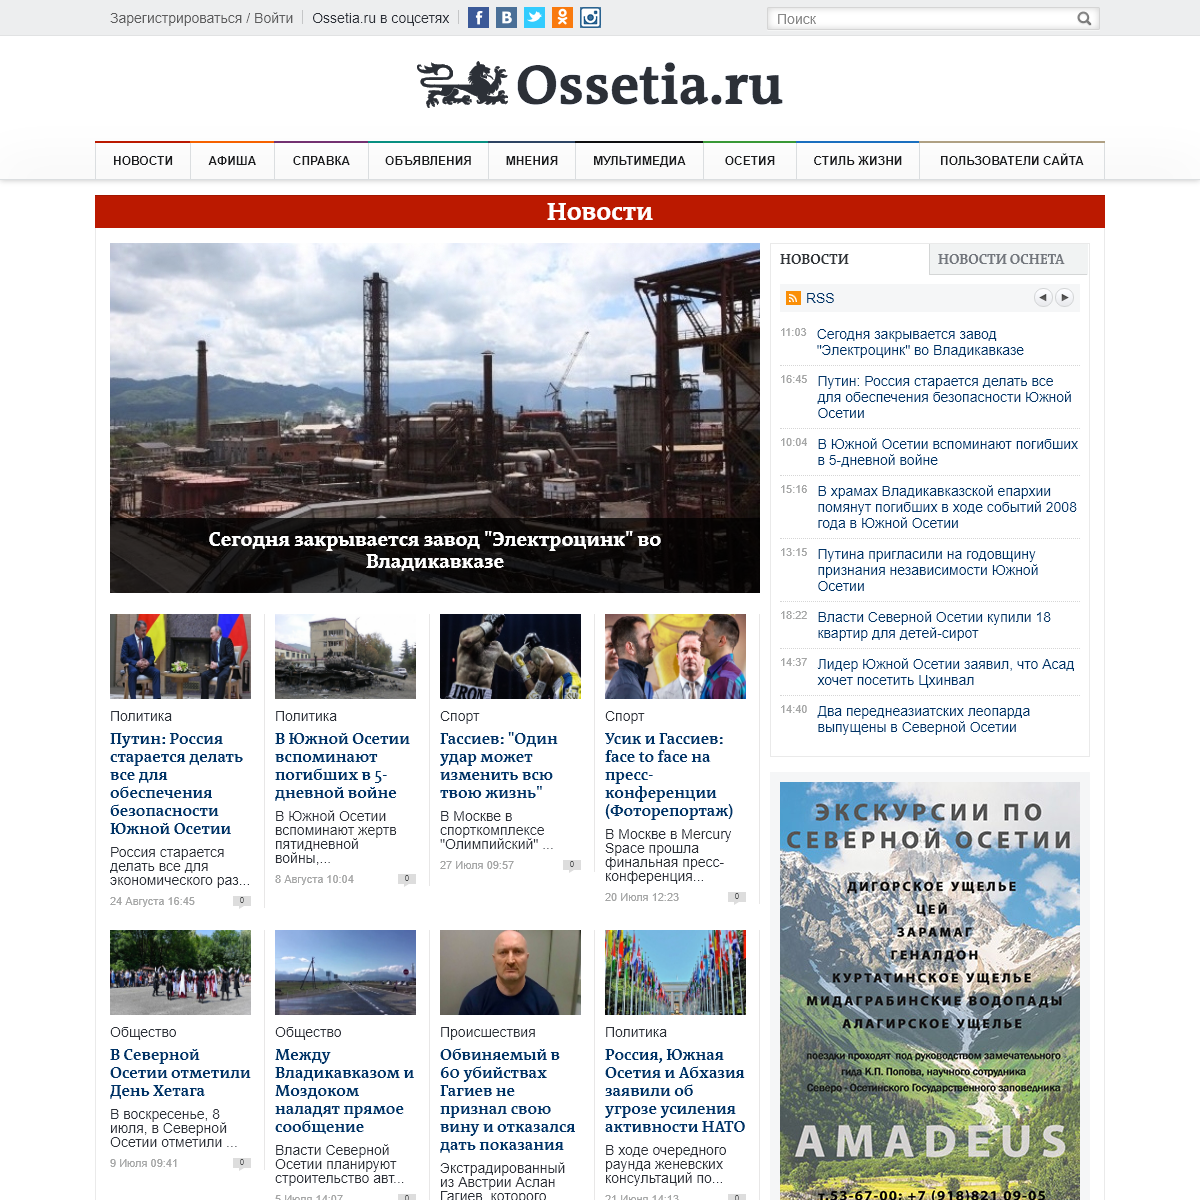 A complete backup of ossetia.ru